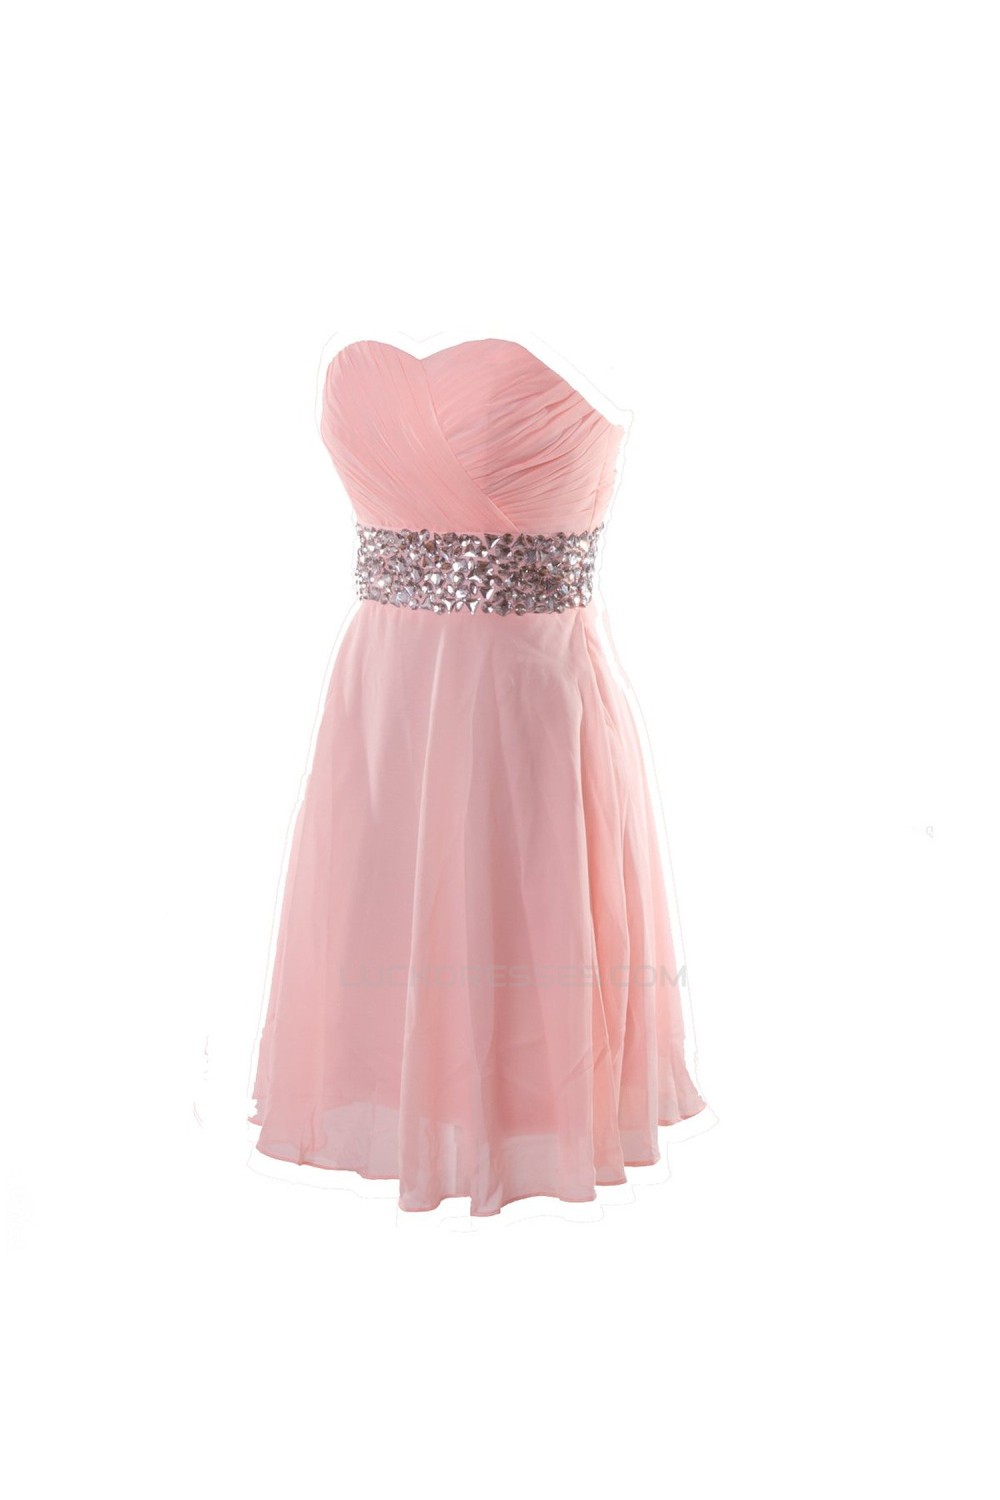 Short Pink Grad Dresses Online Hotsell ...